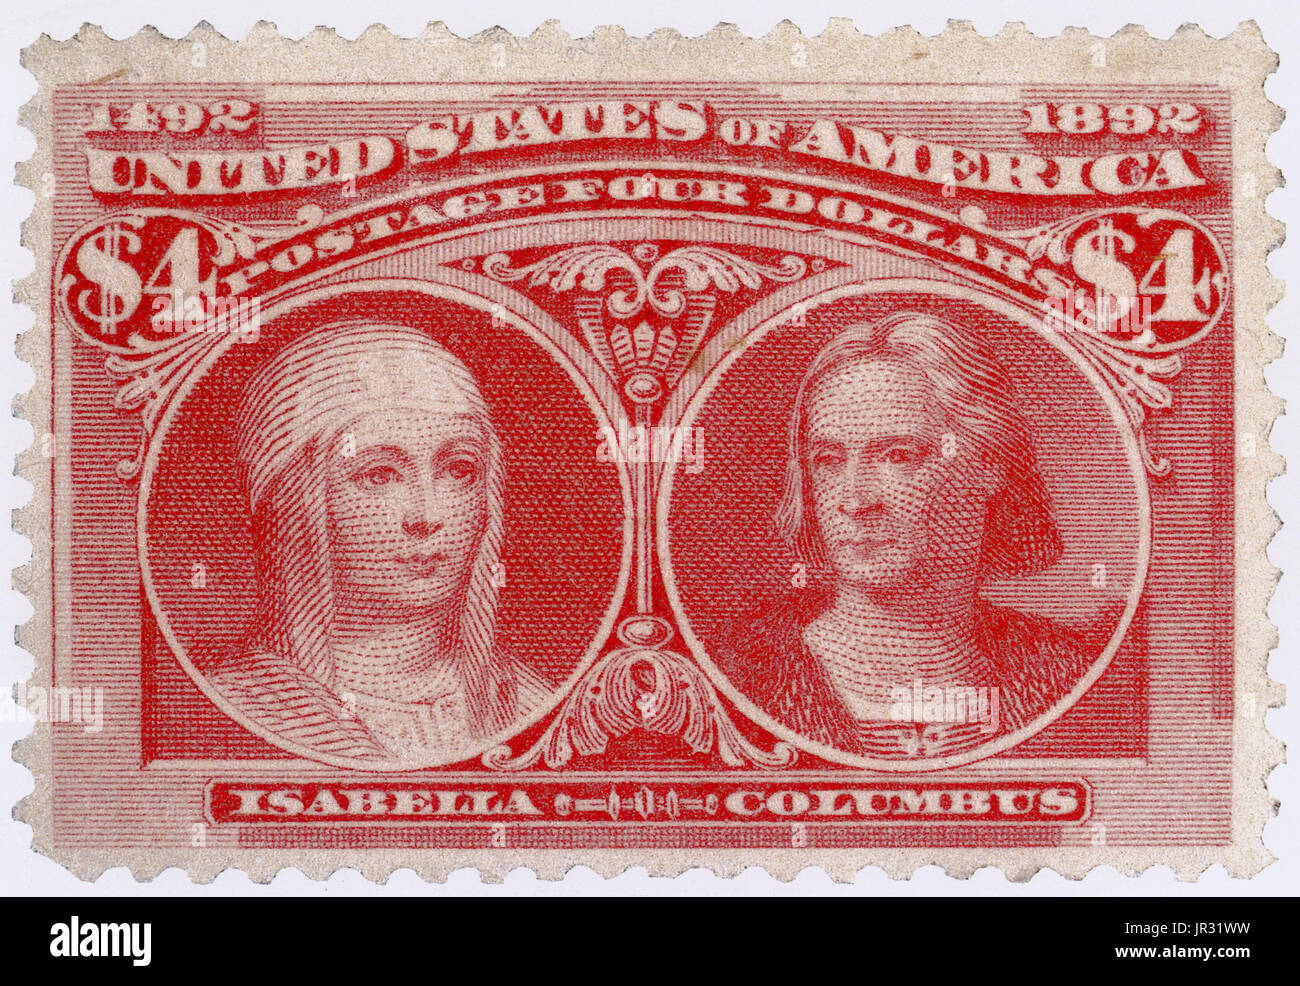 Isabella and Columbus,U.S. Postage Stamp,1893 Stock Photo